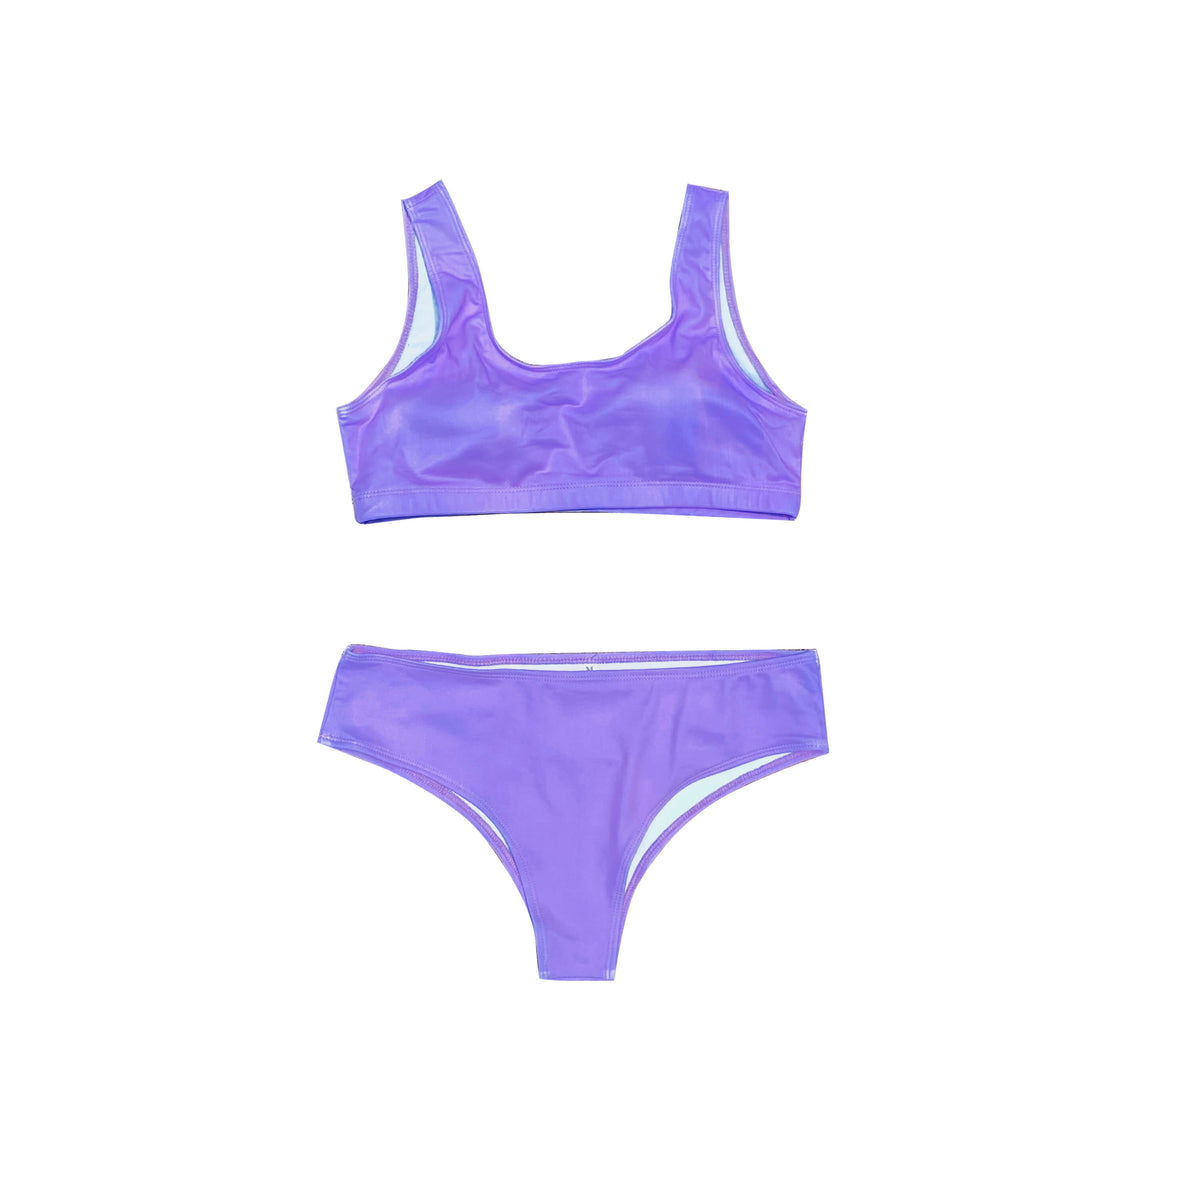 Islandhaze® color changing high waisted bikini -Pink to purple